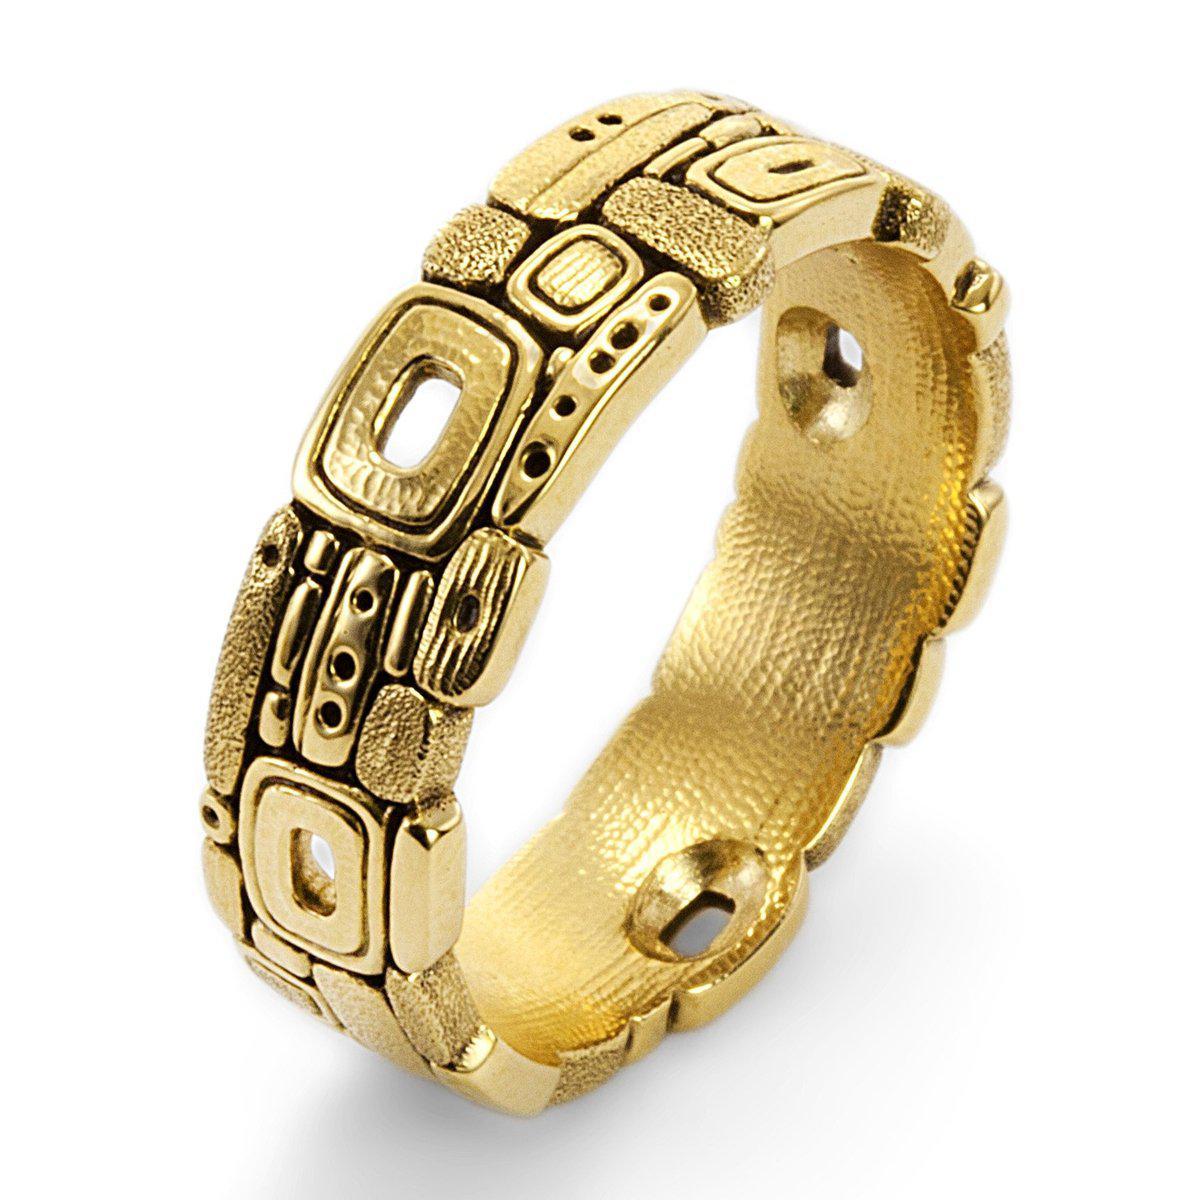 stone barn men's band alex sepkus r-169 yellow gold mens ring